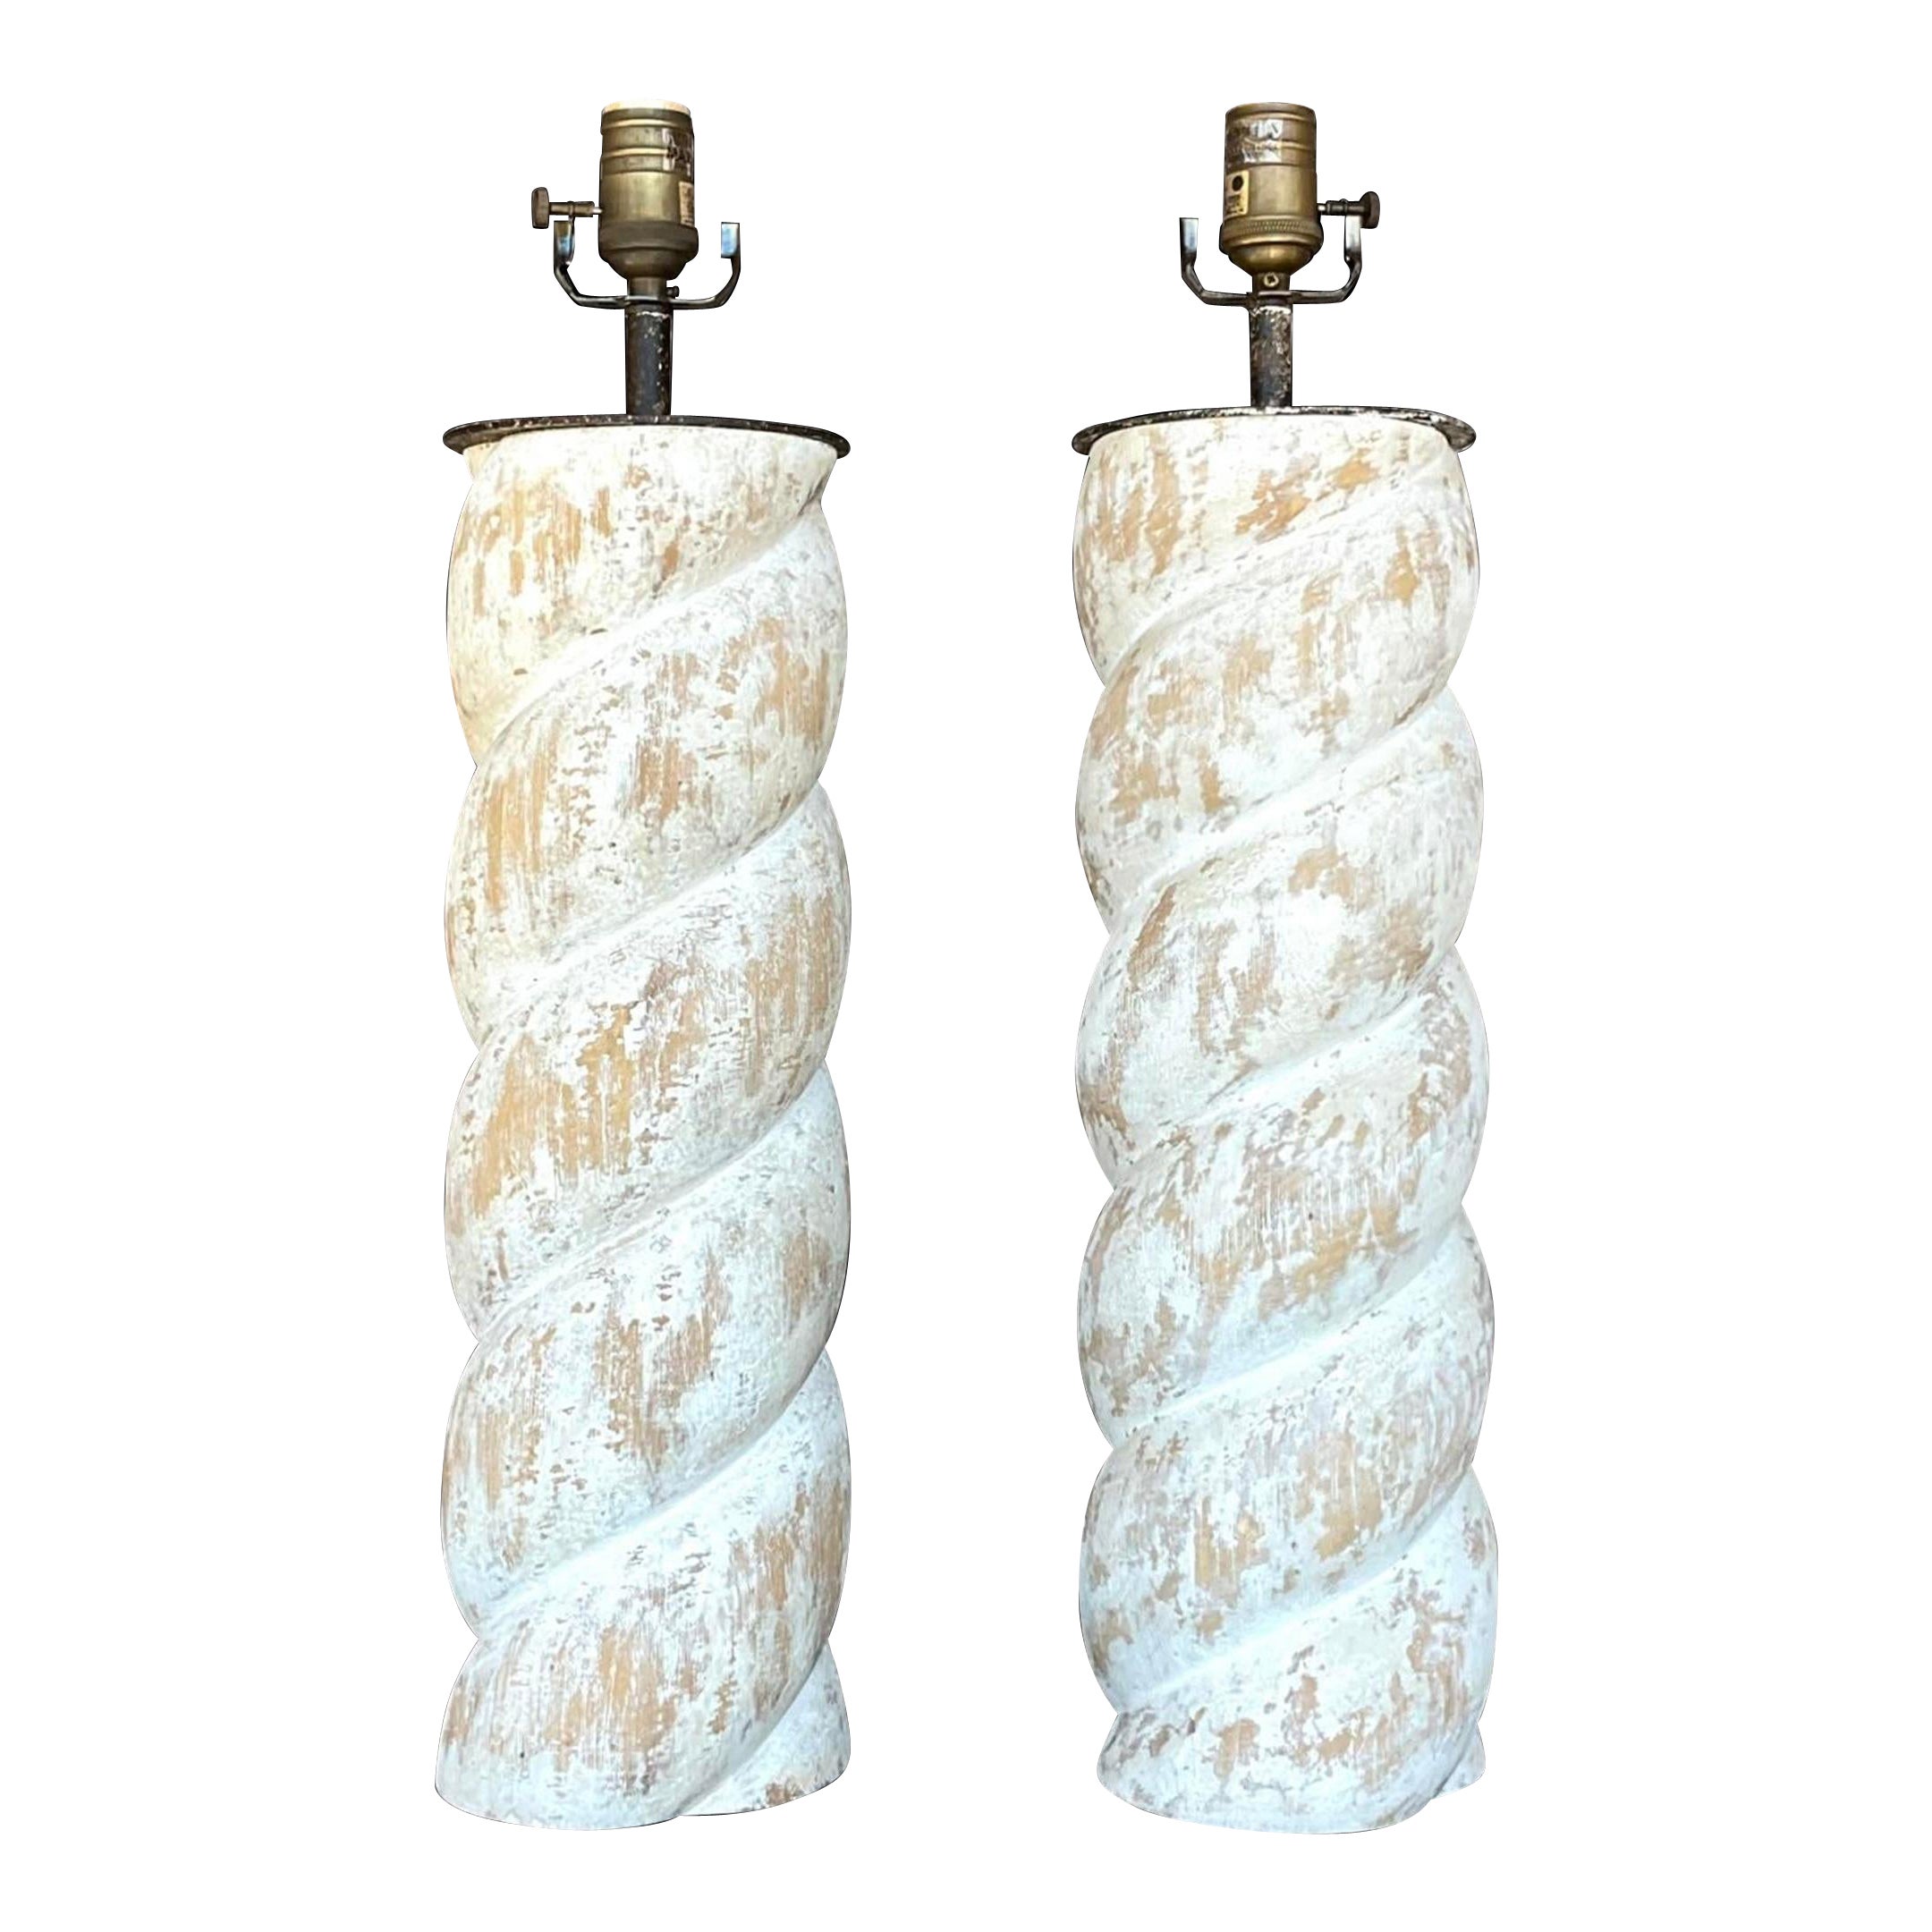 Vintage Boho Whitewashed Twist Column Lamps - a Pair For Sale